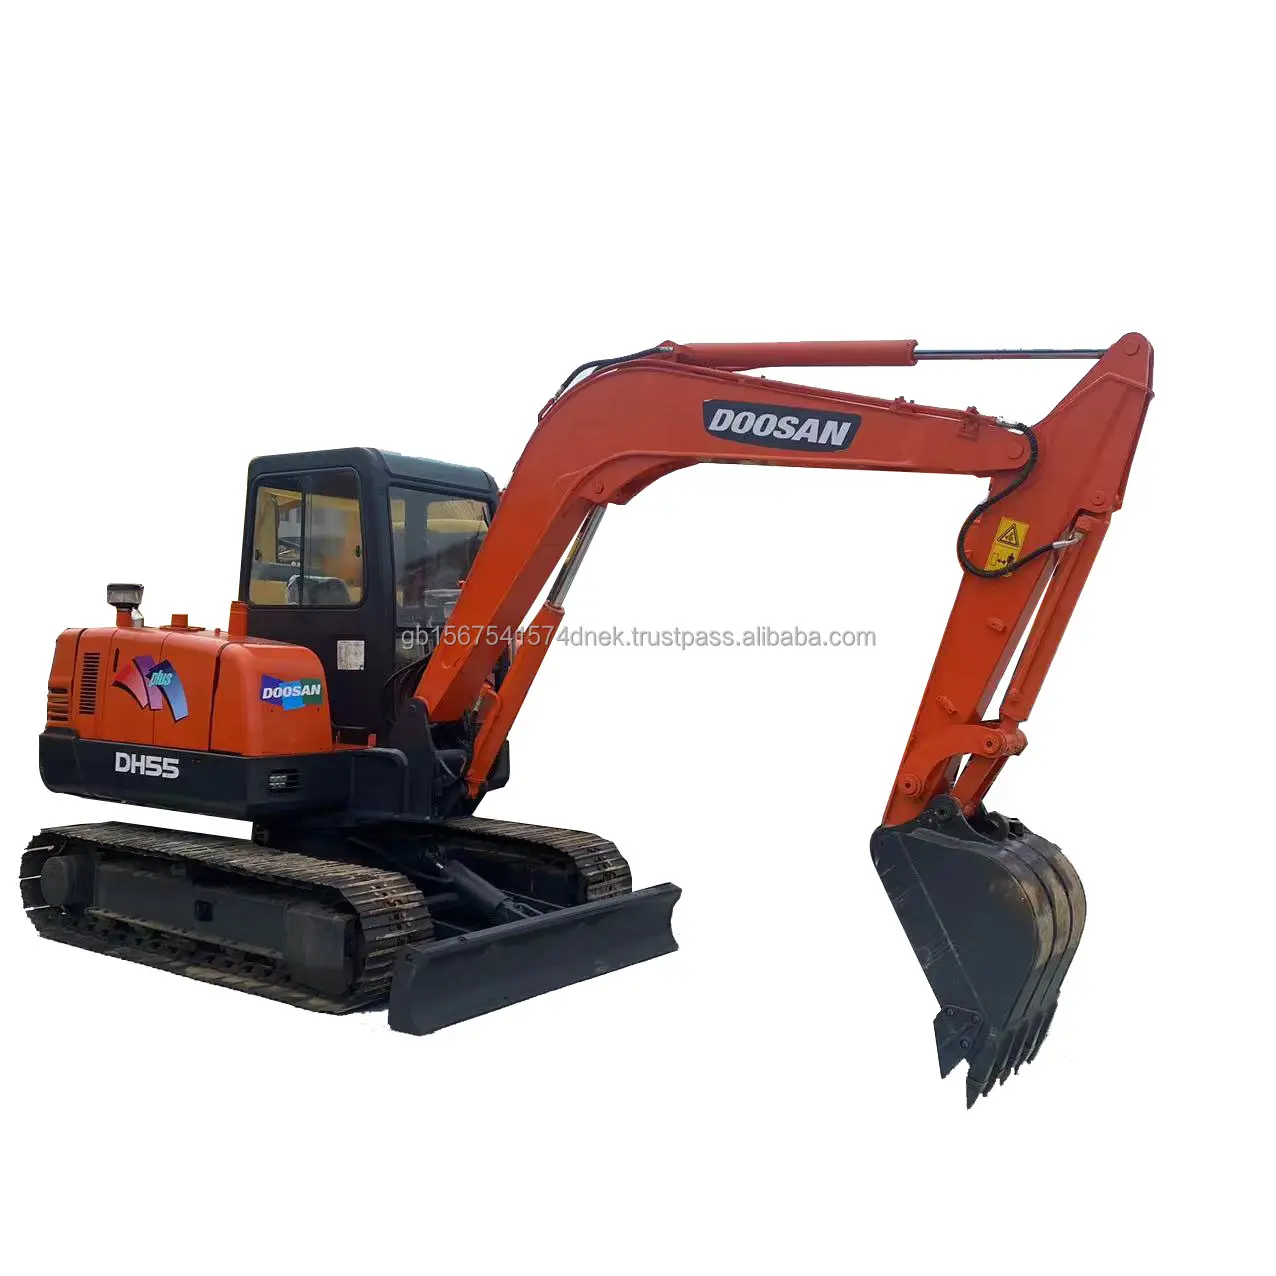 Doosan DH55 Crawler Excavator 99% New Affordable price Durable in Stock Caterpillar Hitachi Kobelco Original Used Excavator